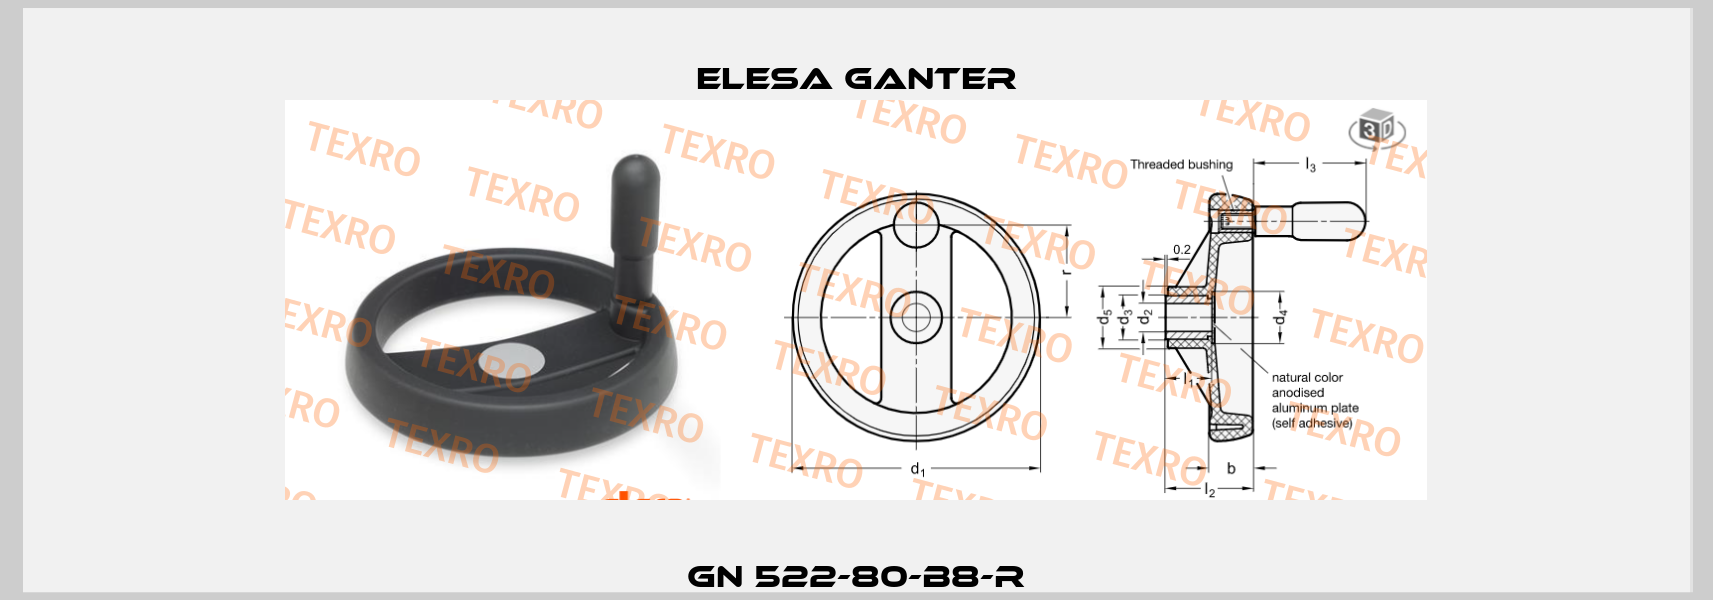 GN 522-80-B8-R Elesa Ganter